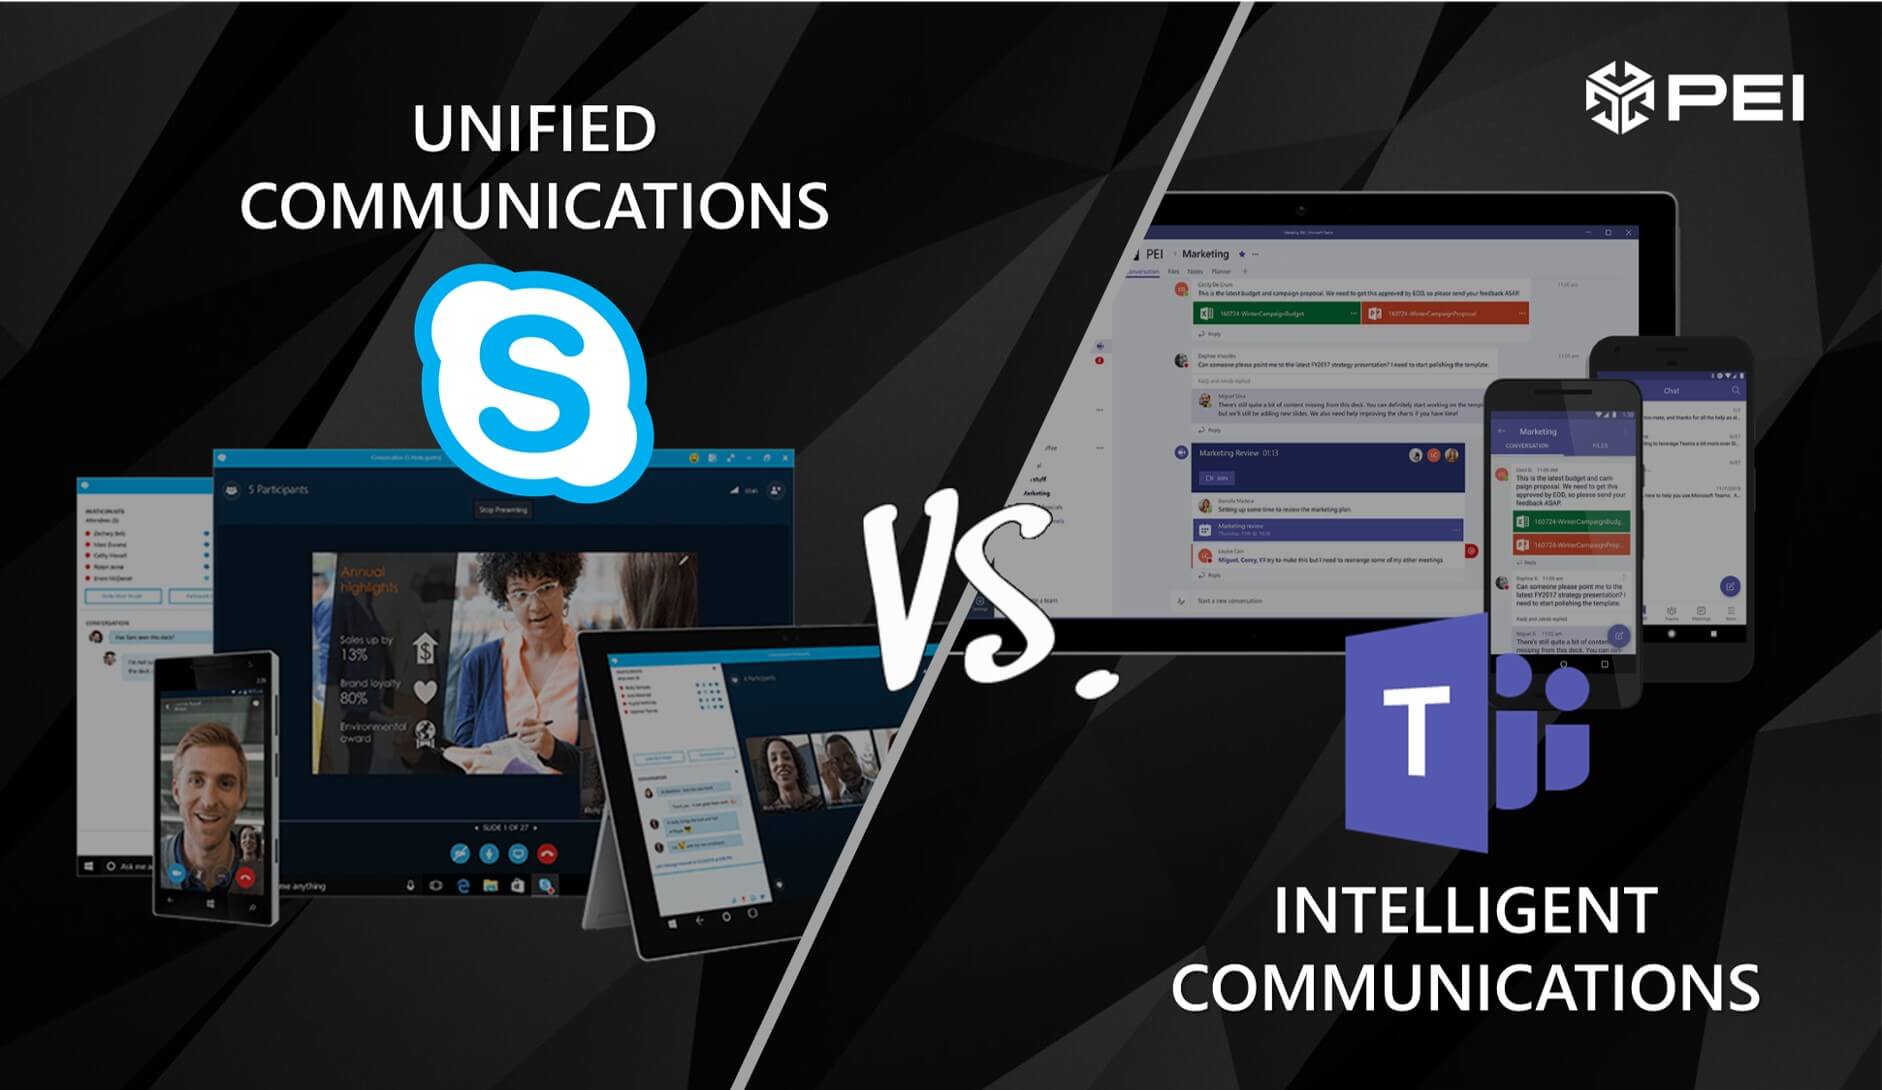 Unified communications vs intelligent communications words